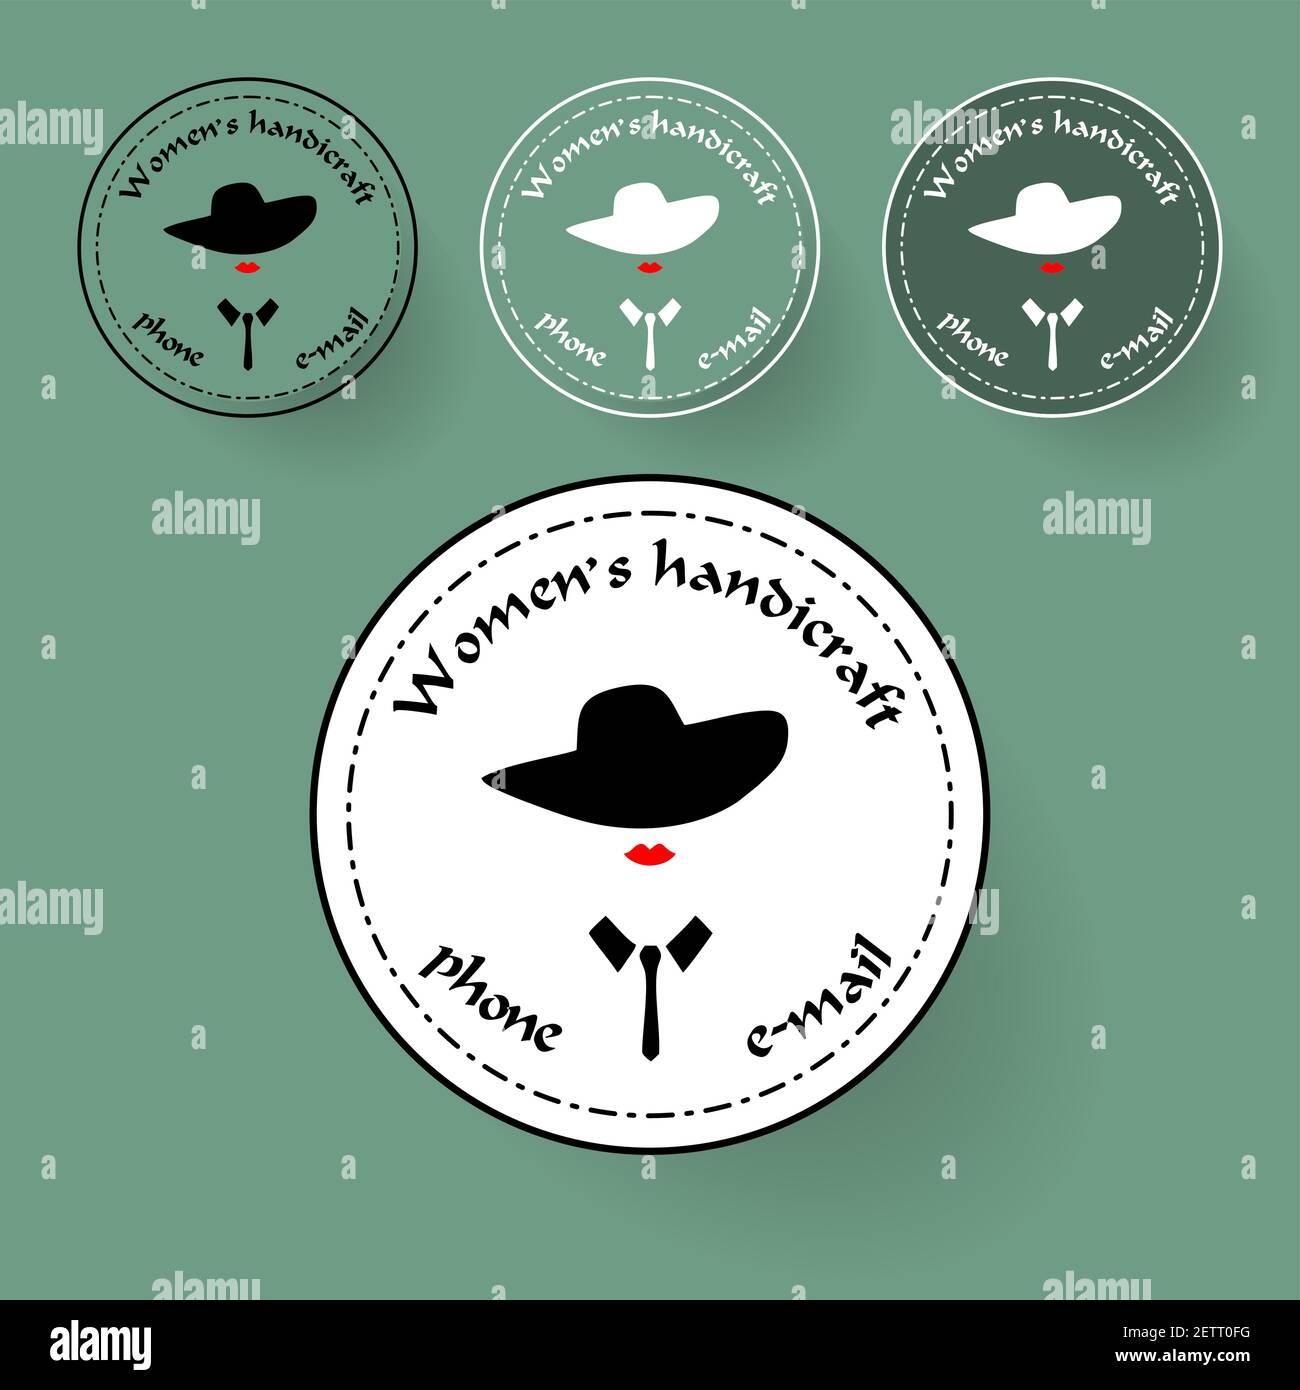 Stamps for needlework, handmade, handicraft products. Vector illustration Stock Vector